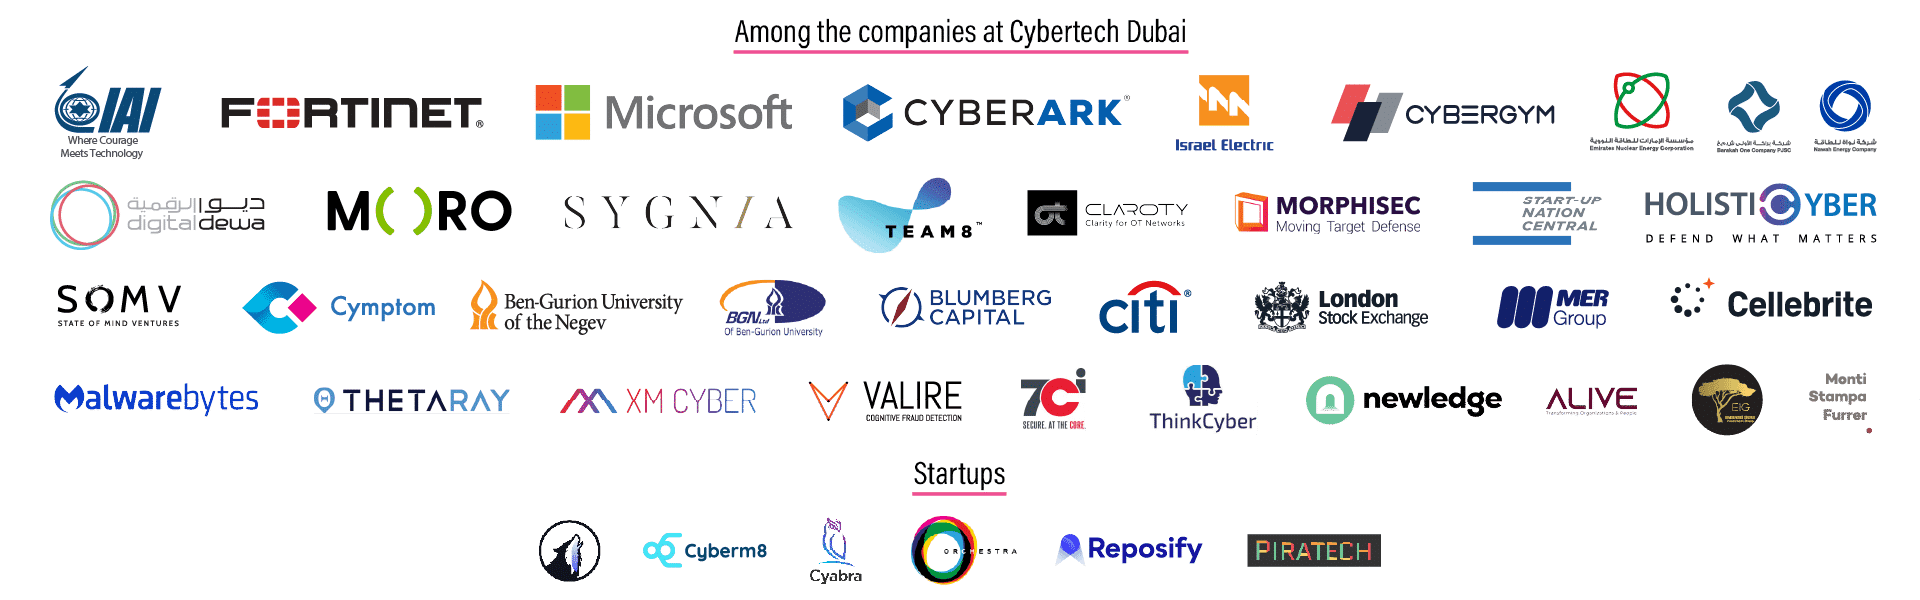 Cybertech Global Dubai 2021